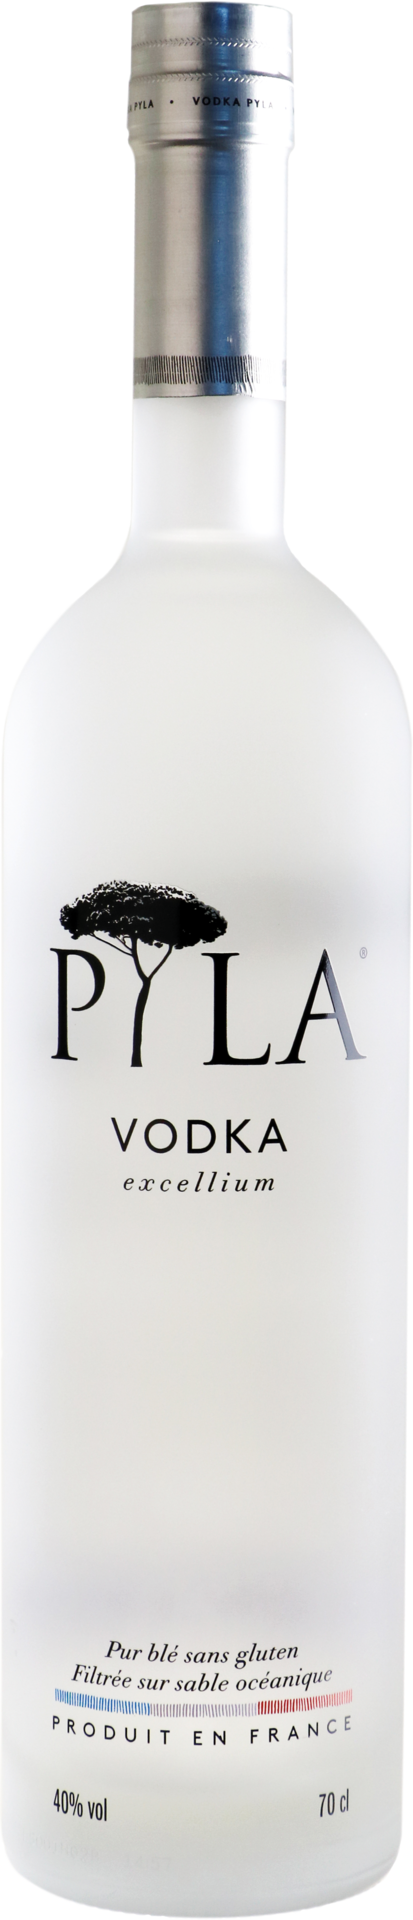 Pyla Vodka excellium